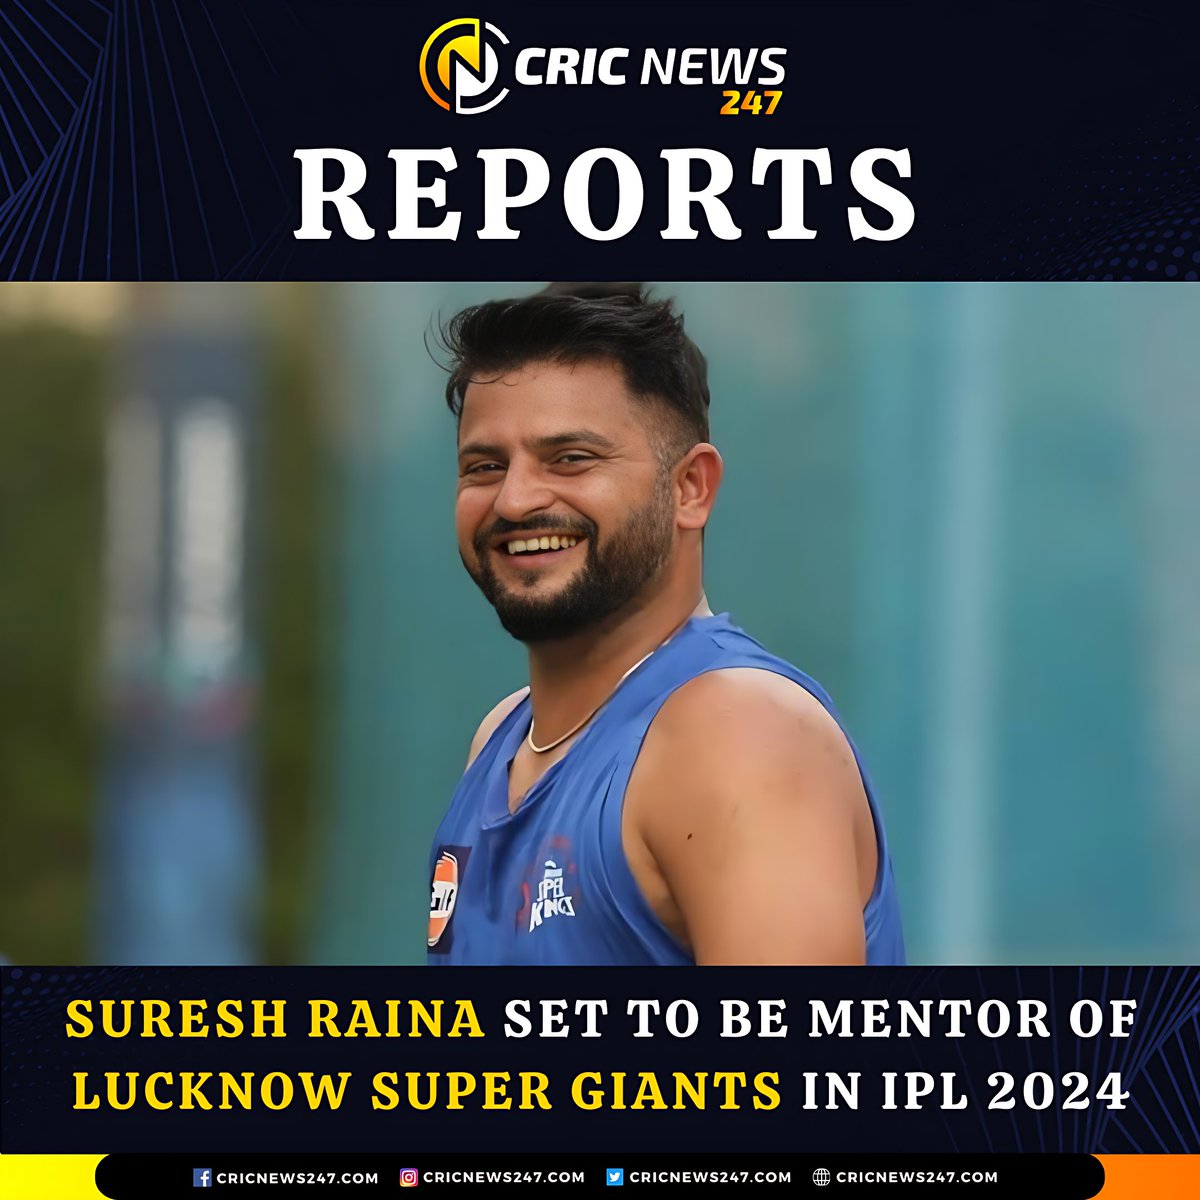 According to Media Reports: Suresh Raina set to be mentor of Lucknow Super Giants in IPL 2024

#sureshraina #Raina #LSG #lucknoesupergiants #ipl #ipl2024 #ipl23 #cricketmatch #cricketlover #cricketchallenge #cricketupdates #cricketnews #cricnews247